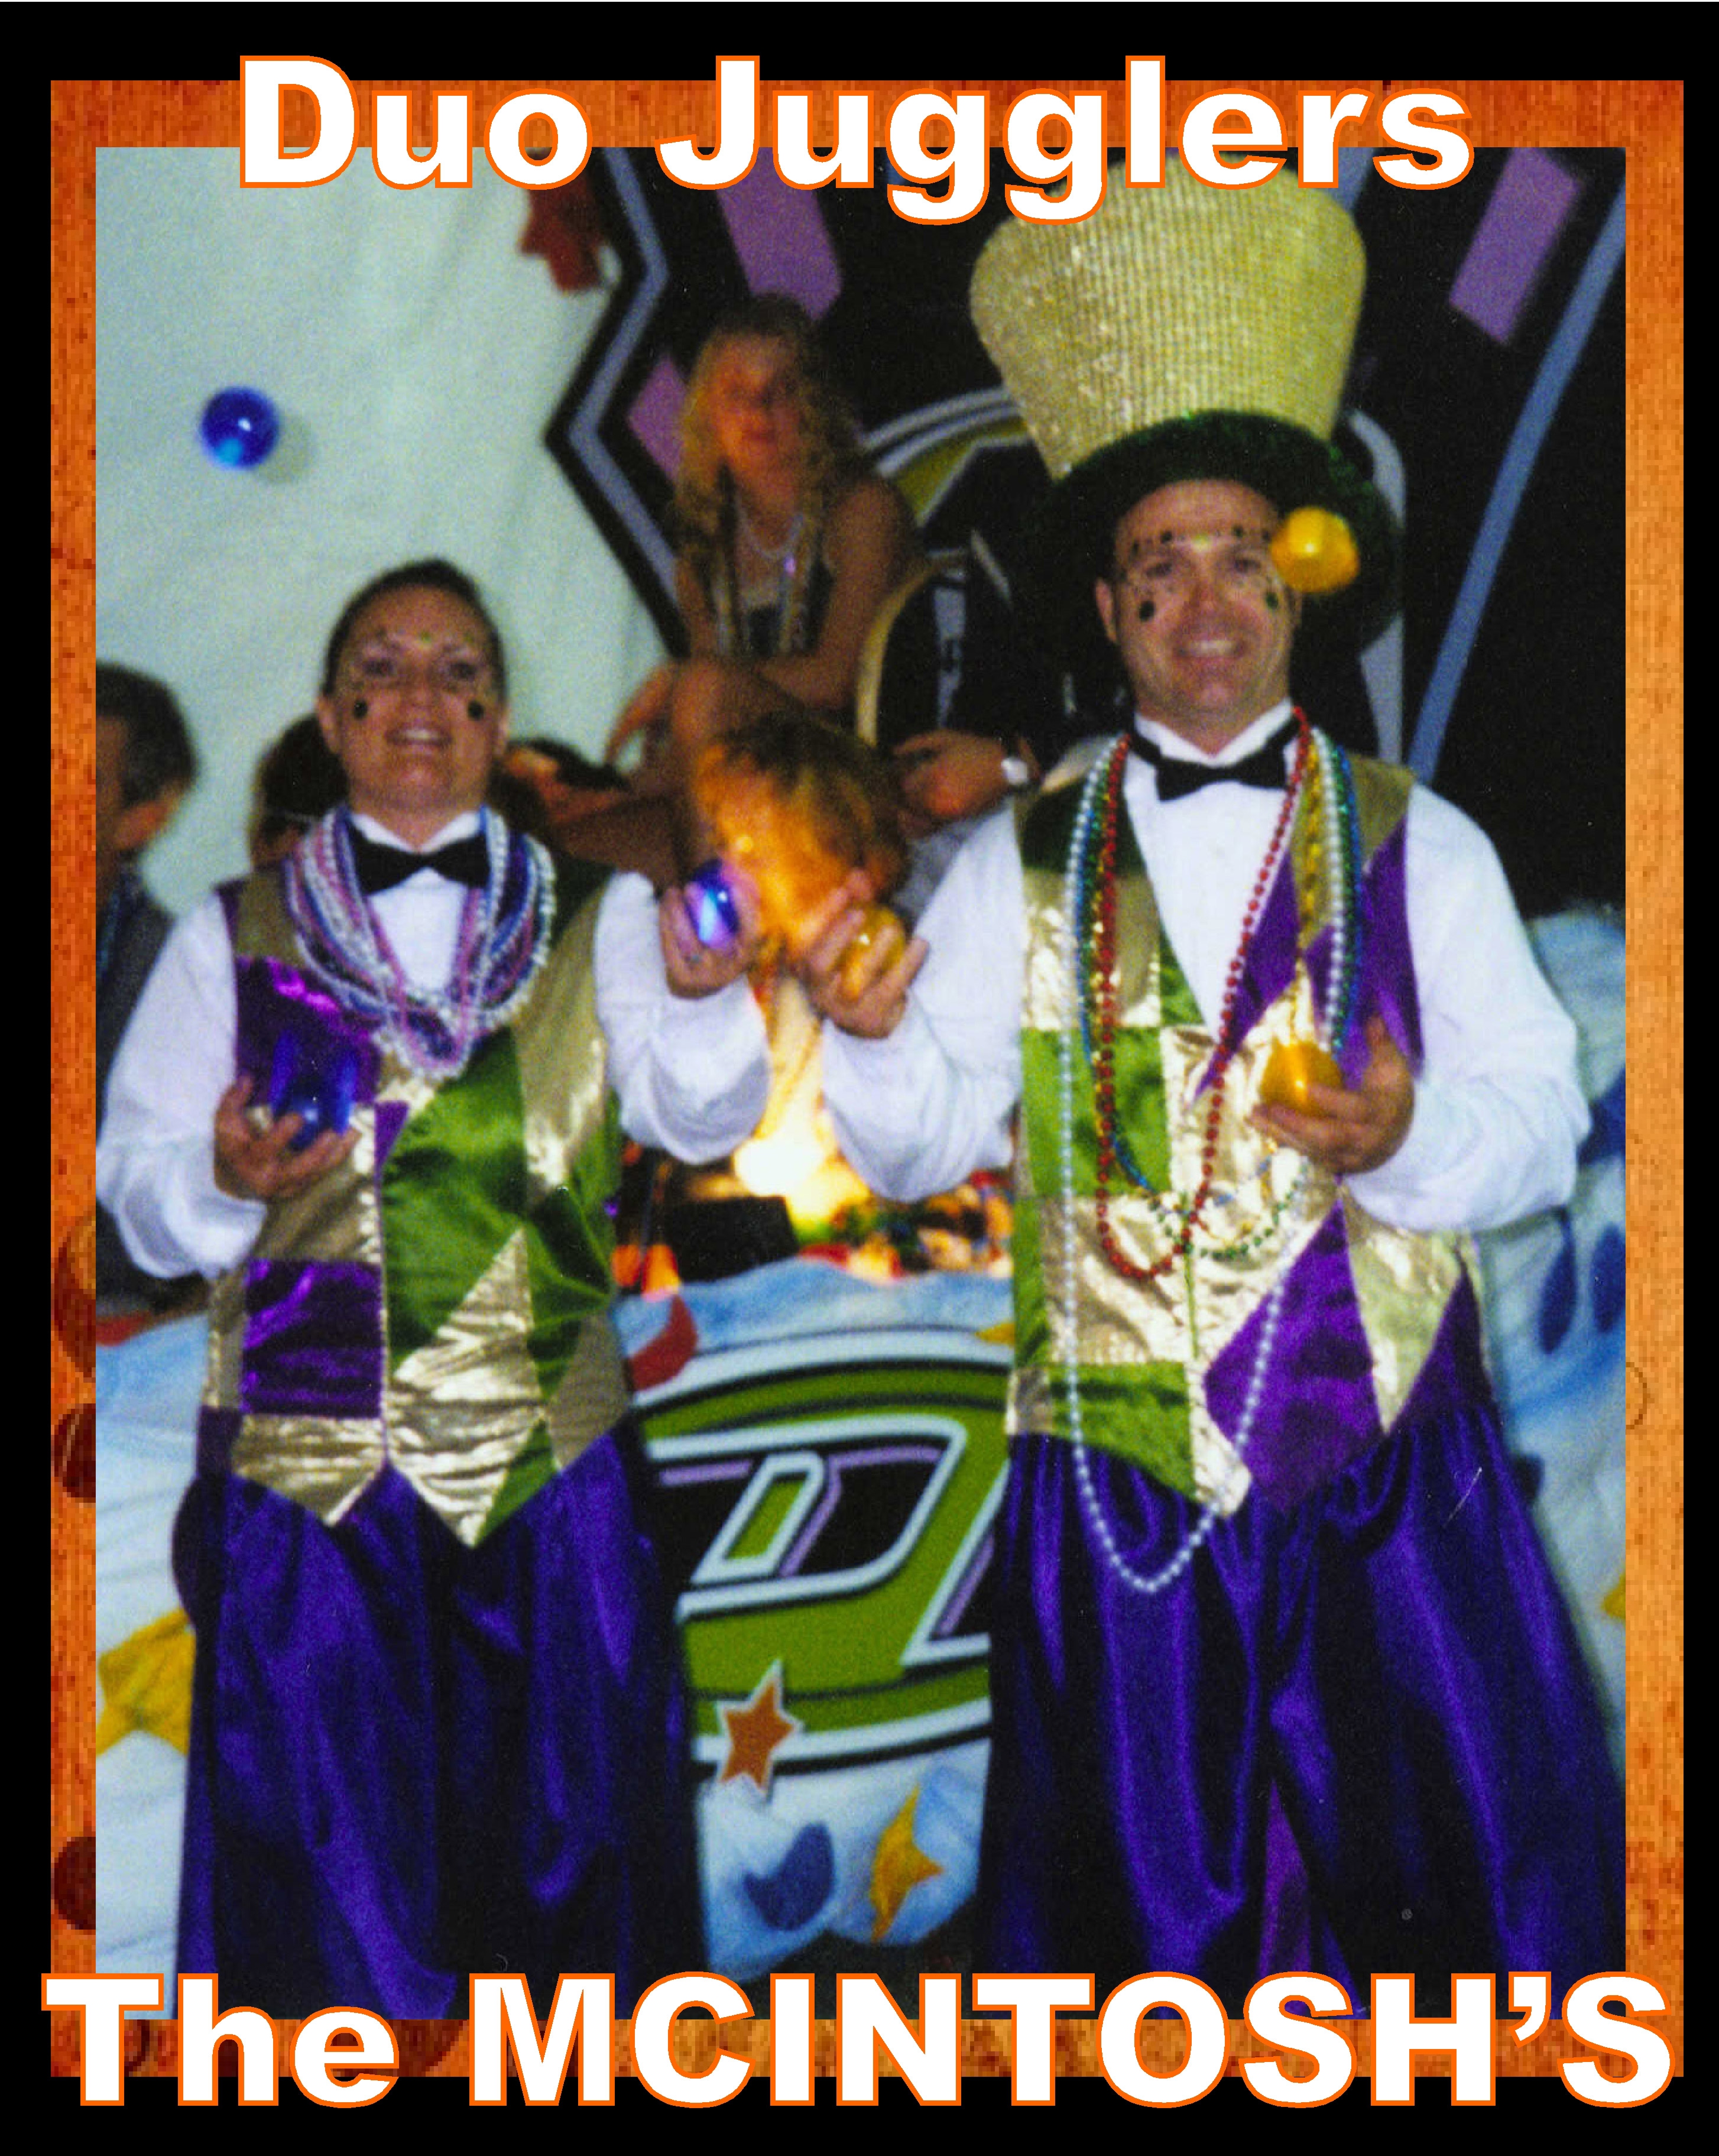 The MCINTOSH'S- Professional Jugglers. Mardi Gras at Pleasure Island Downtown Disney. Orlando, FL